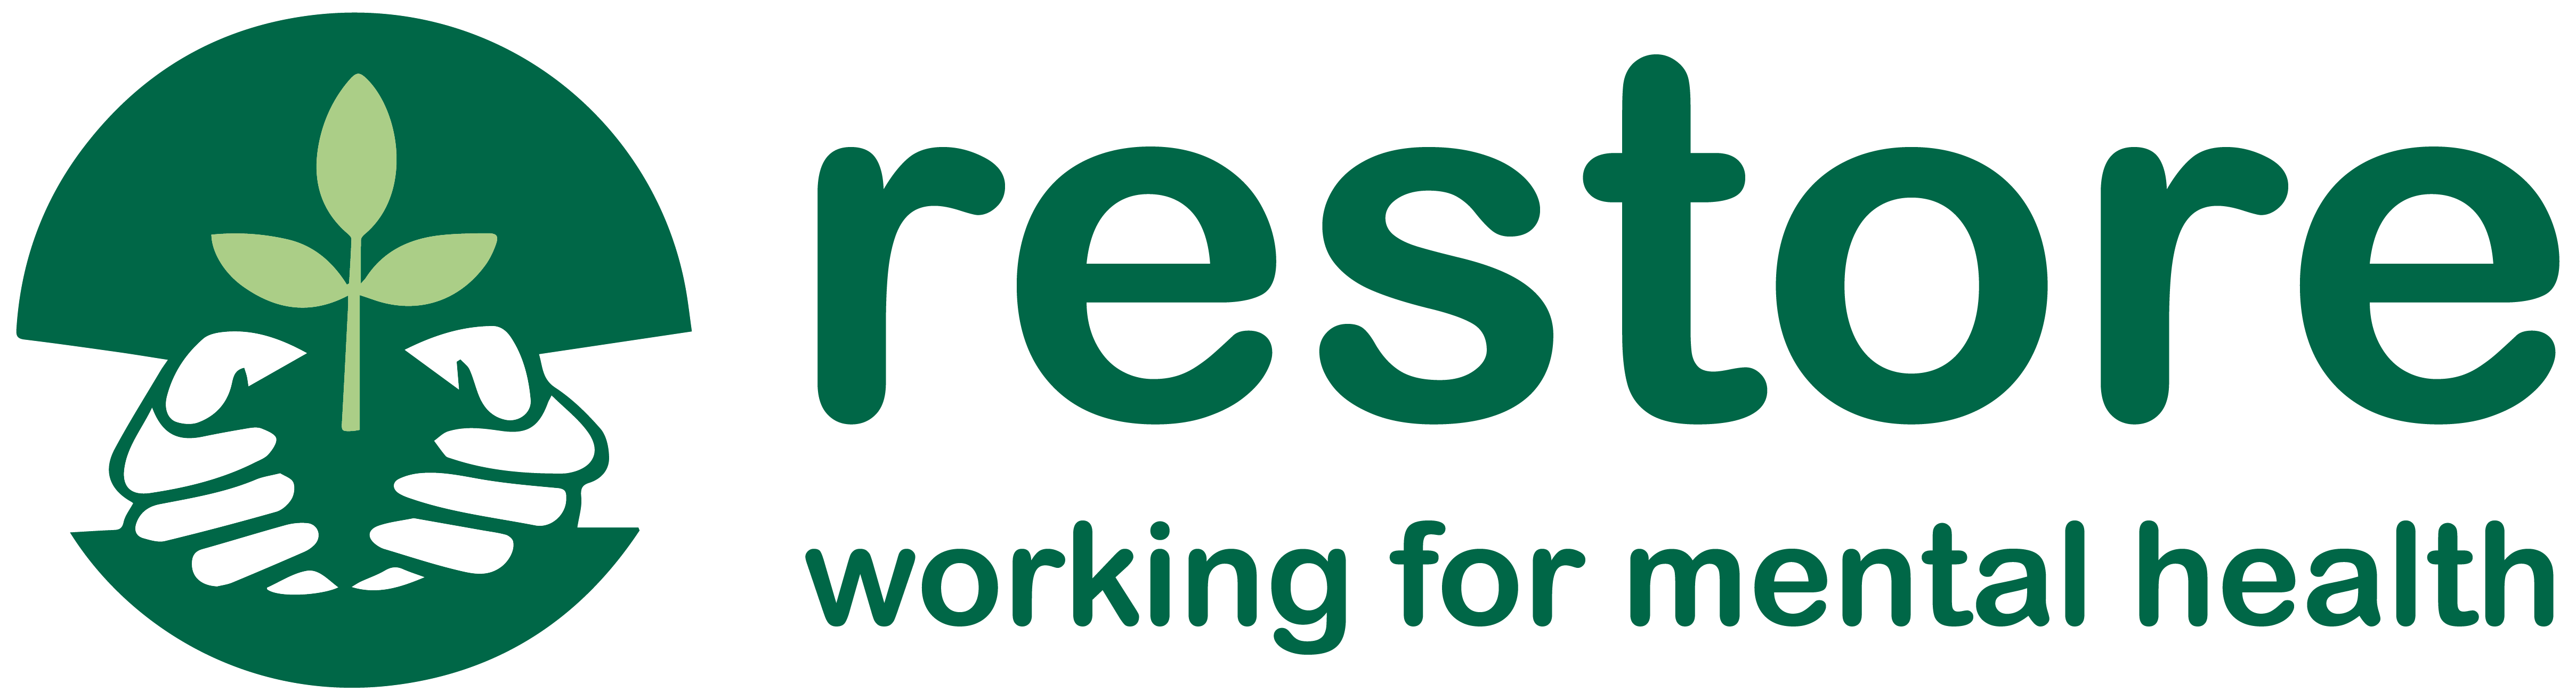 Restore - working for mental health logo